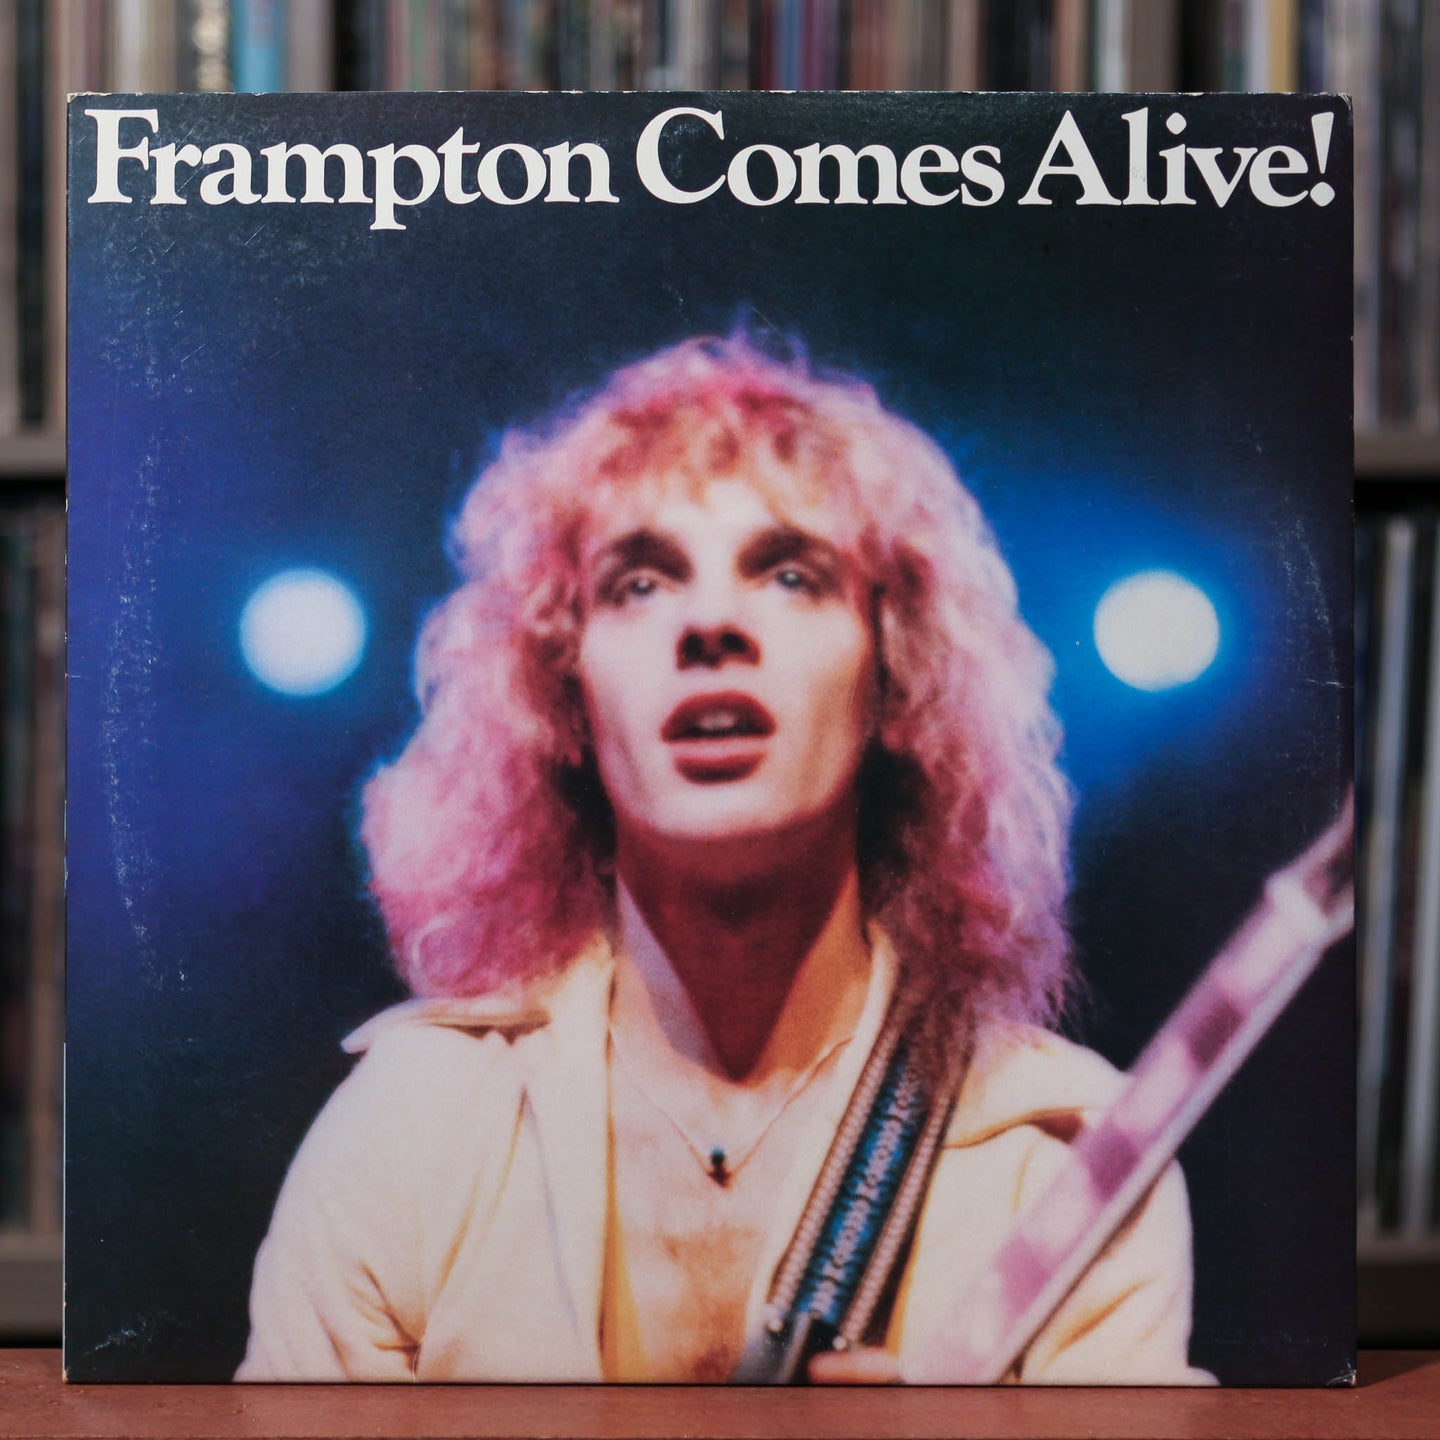 Peter Frampton - Frampton Comes Alive! - 2LP - 1976 A&M, EX/VG+